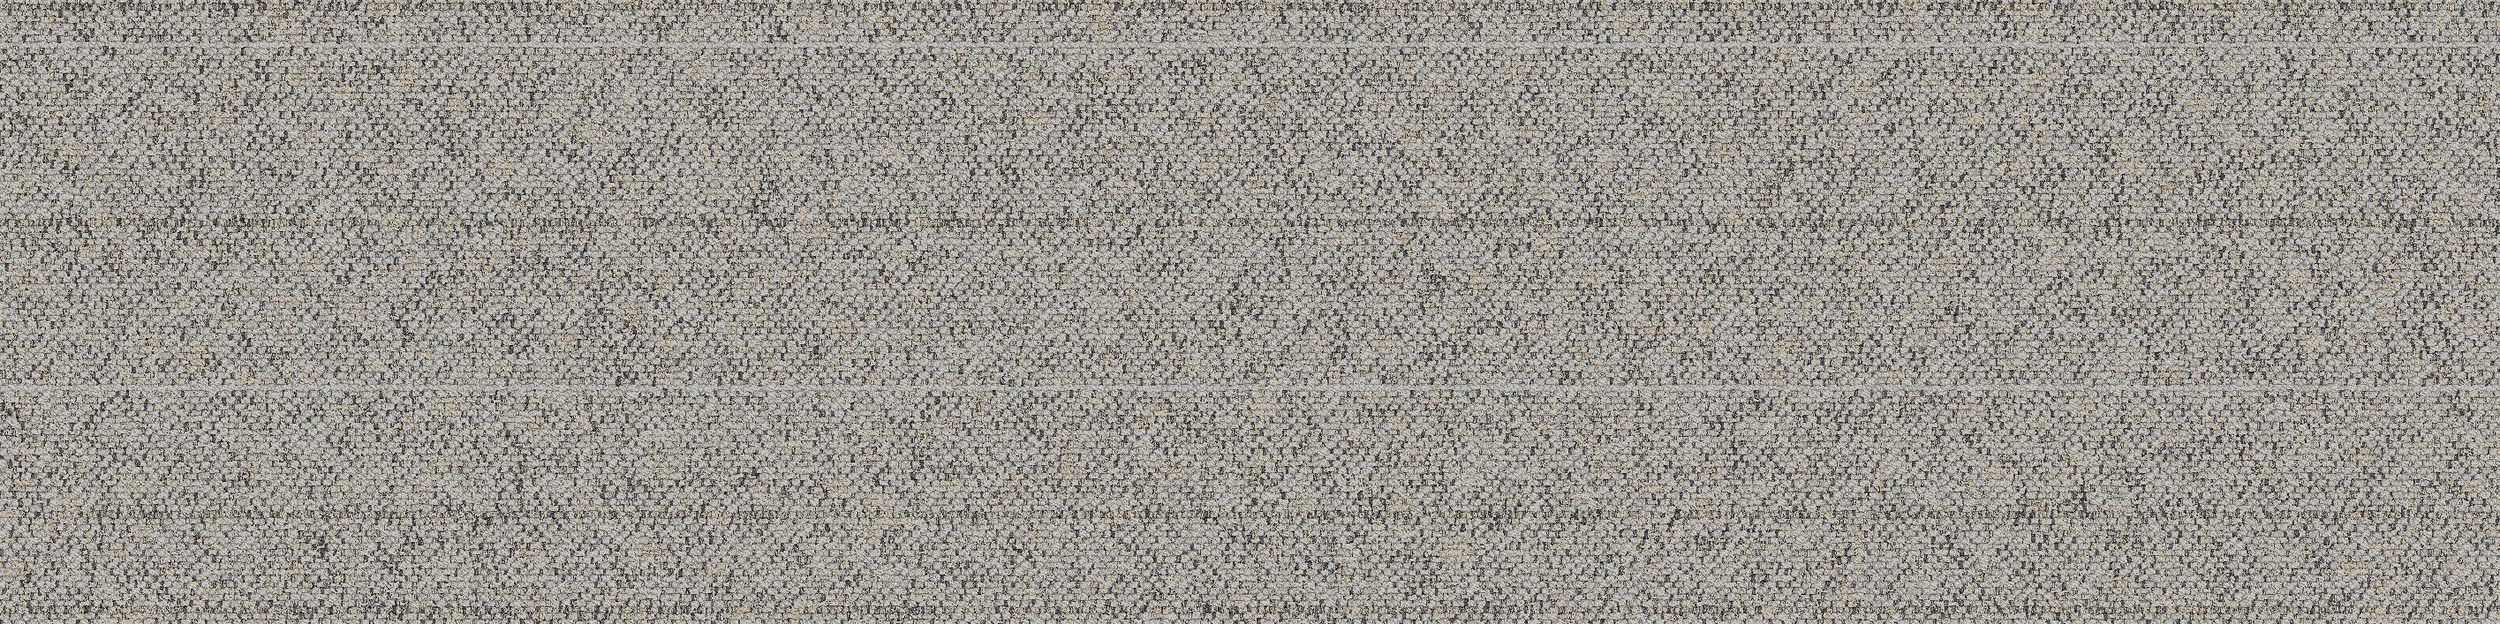 WW860 Carpet Tile In Linen Tweed image number 2